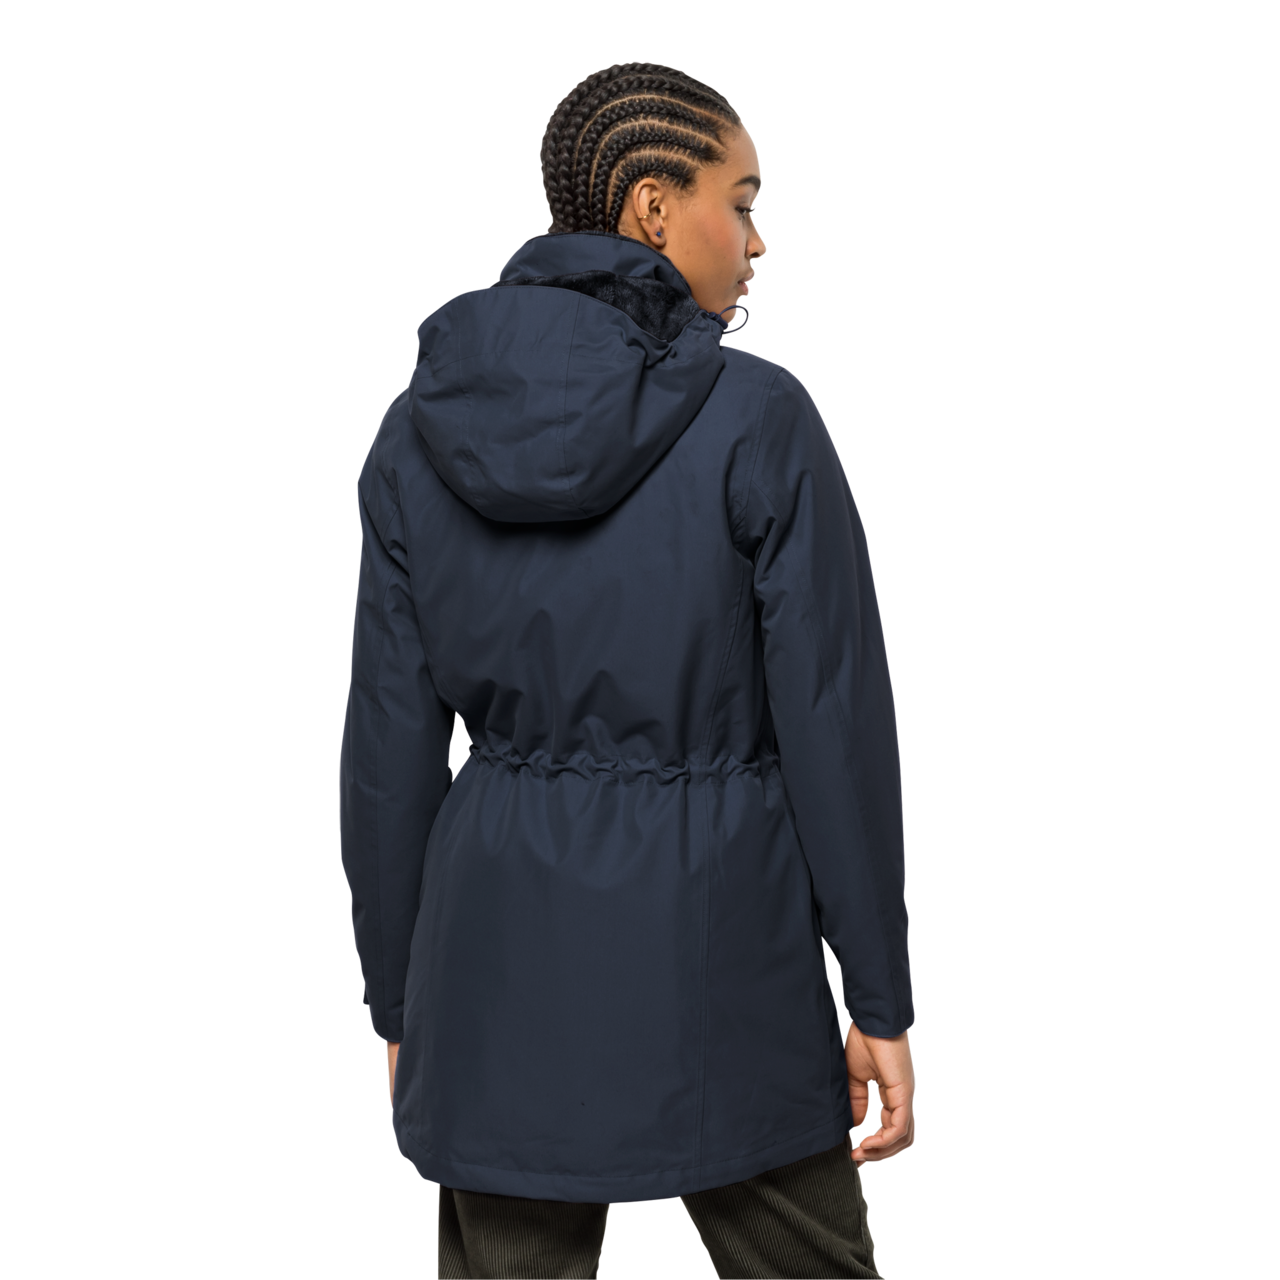 Winter Coats & Rain Jackets for Women